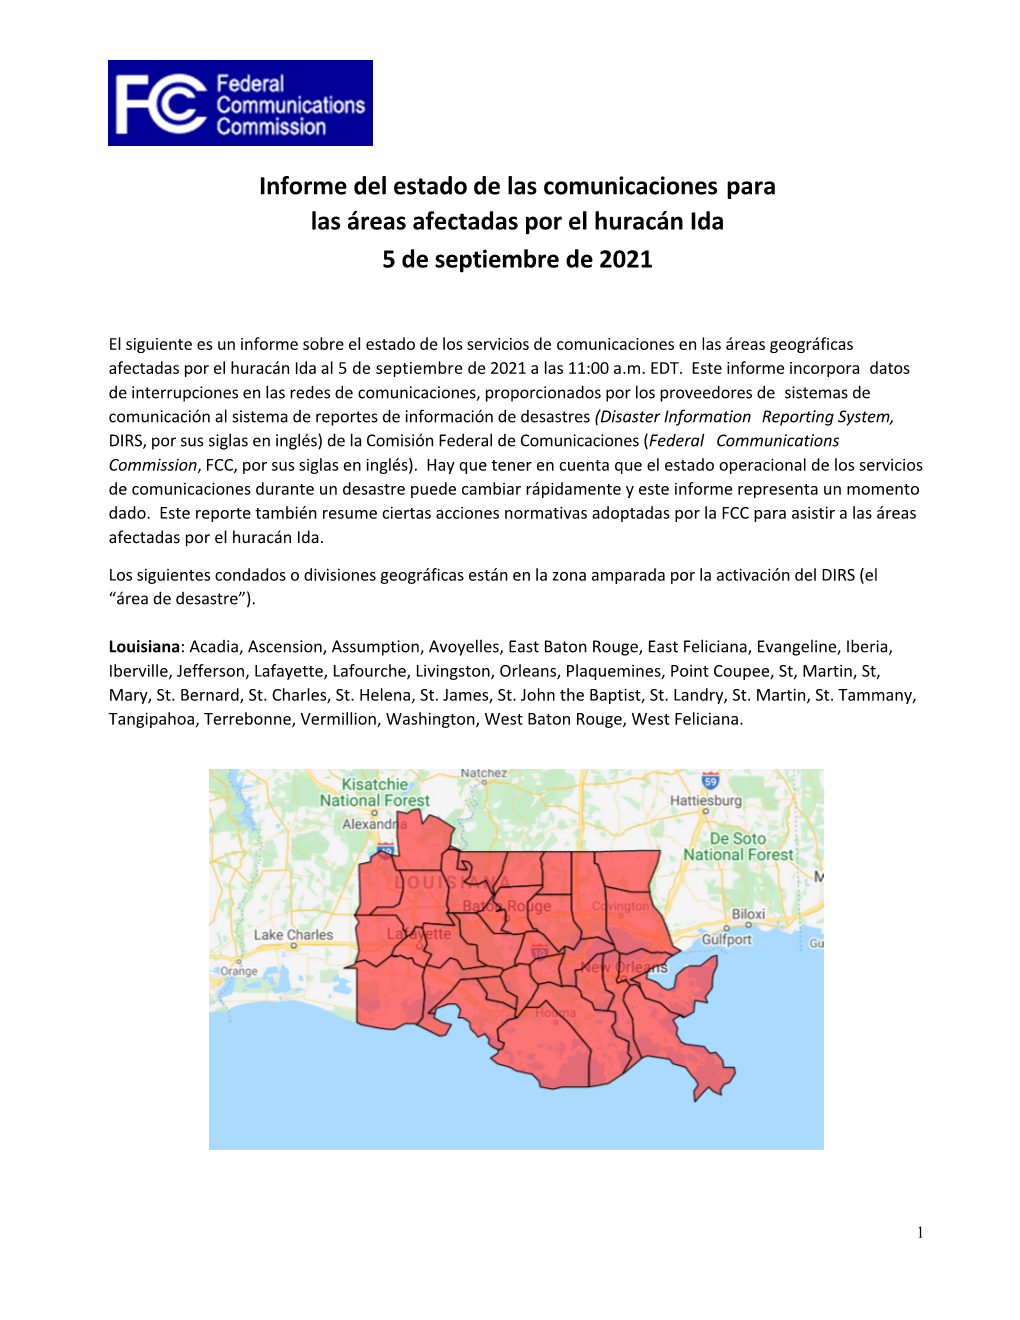 FCC Public Outage Report -Hurricane Ida -09-05-2021 Spanish